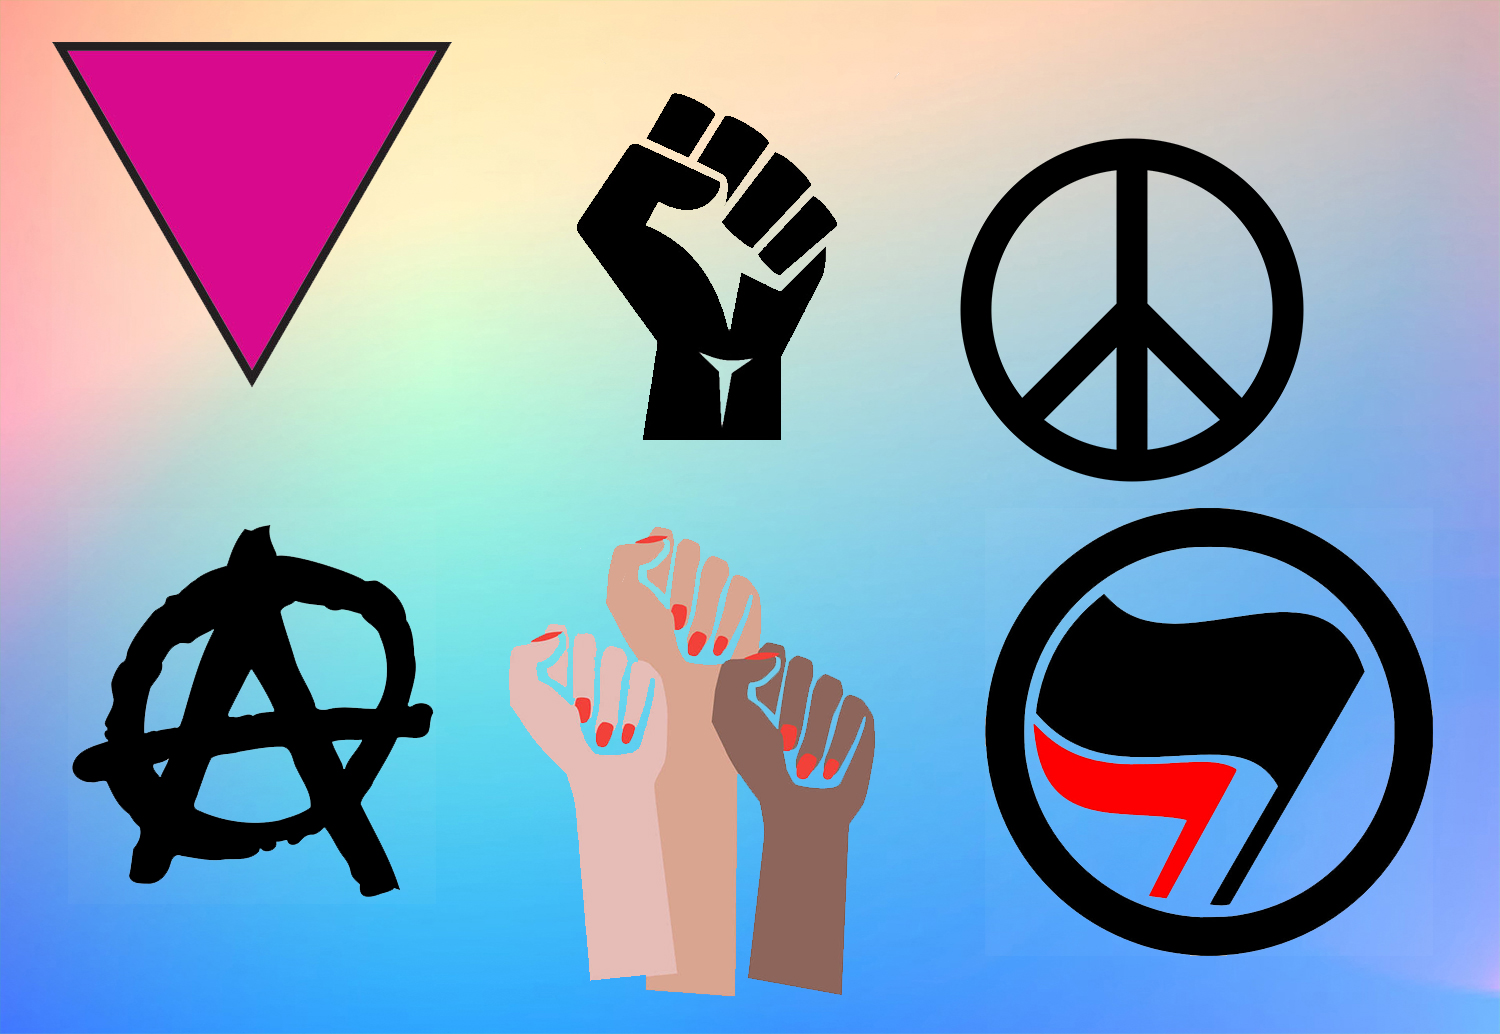 universal symbols of freedom